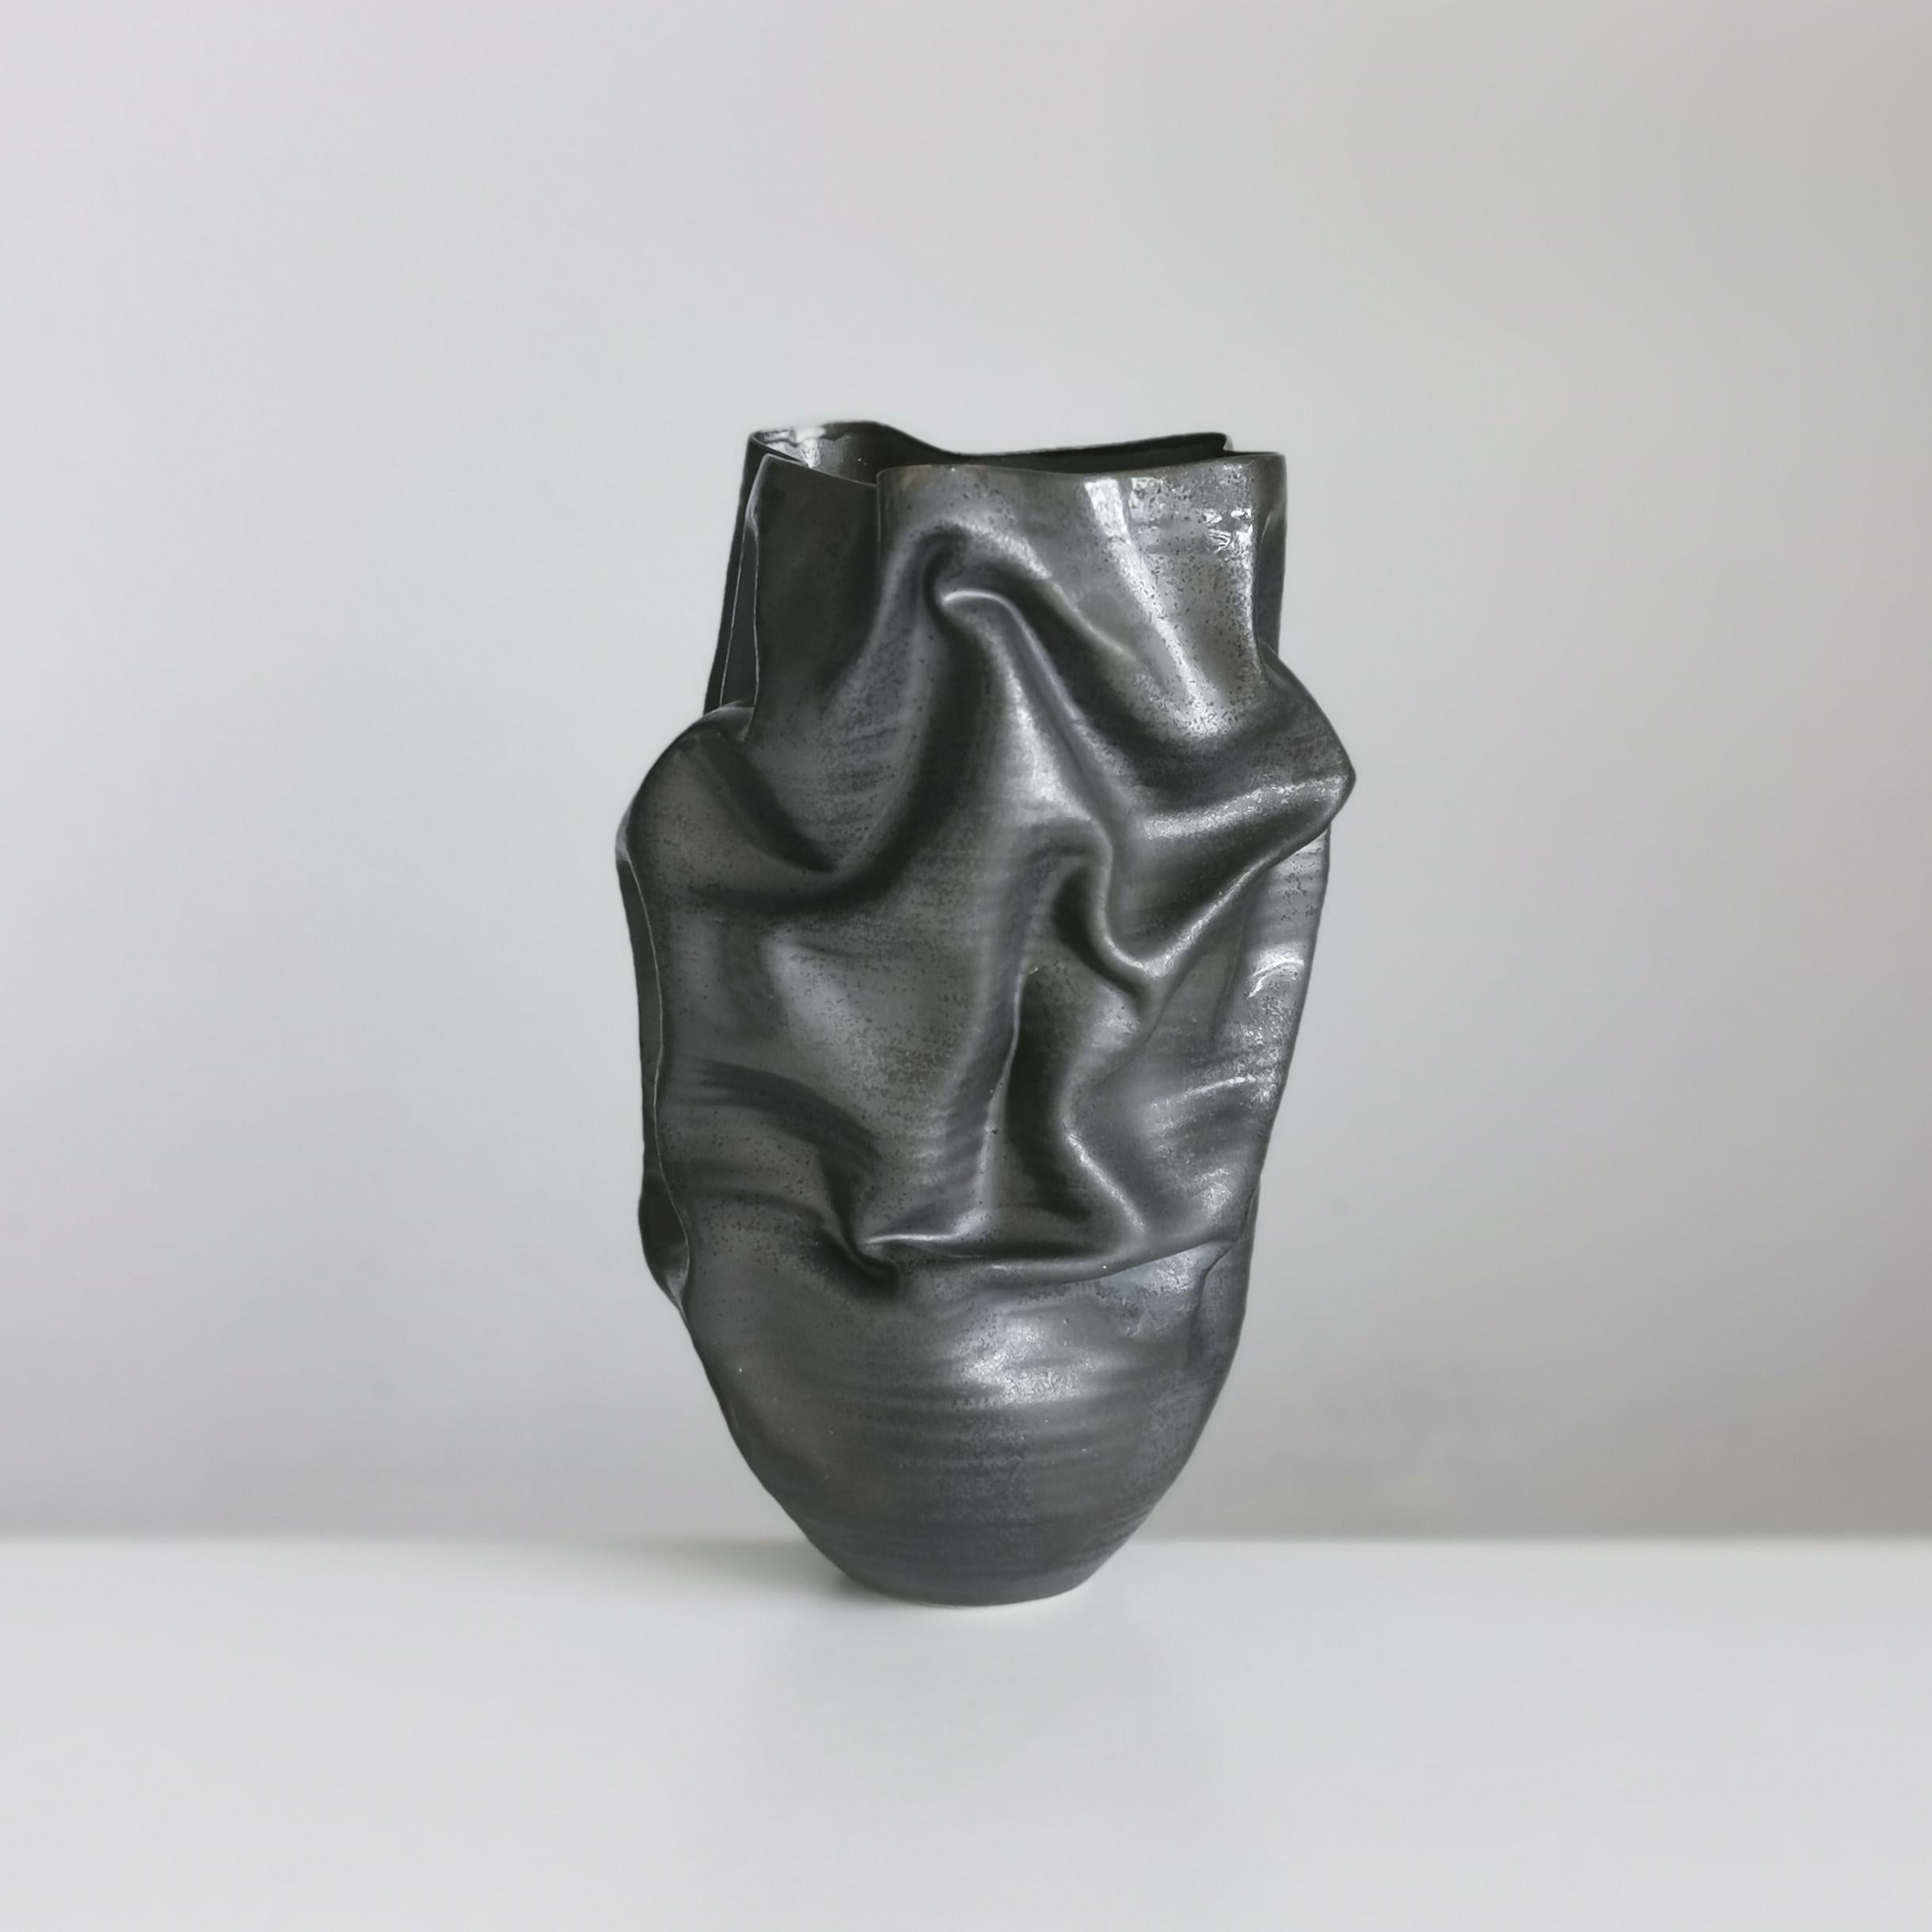 Spanish Unique Ceramic Sculpture Vessel N.57, Black Dehydrated Form, Objet d'Art